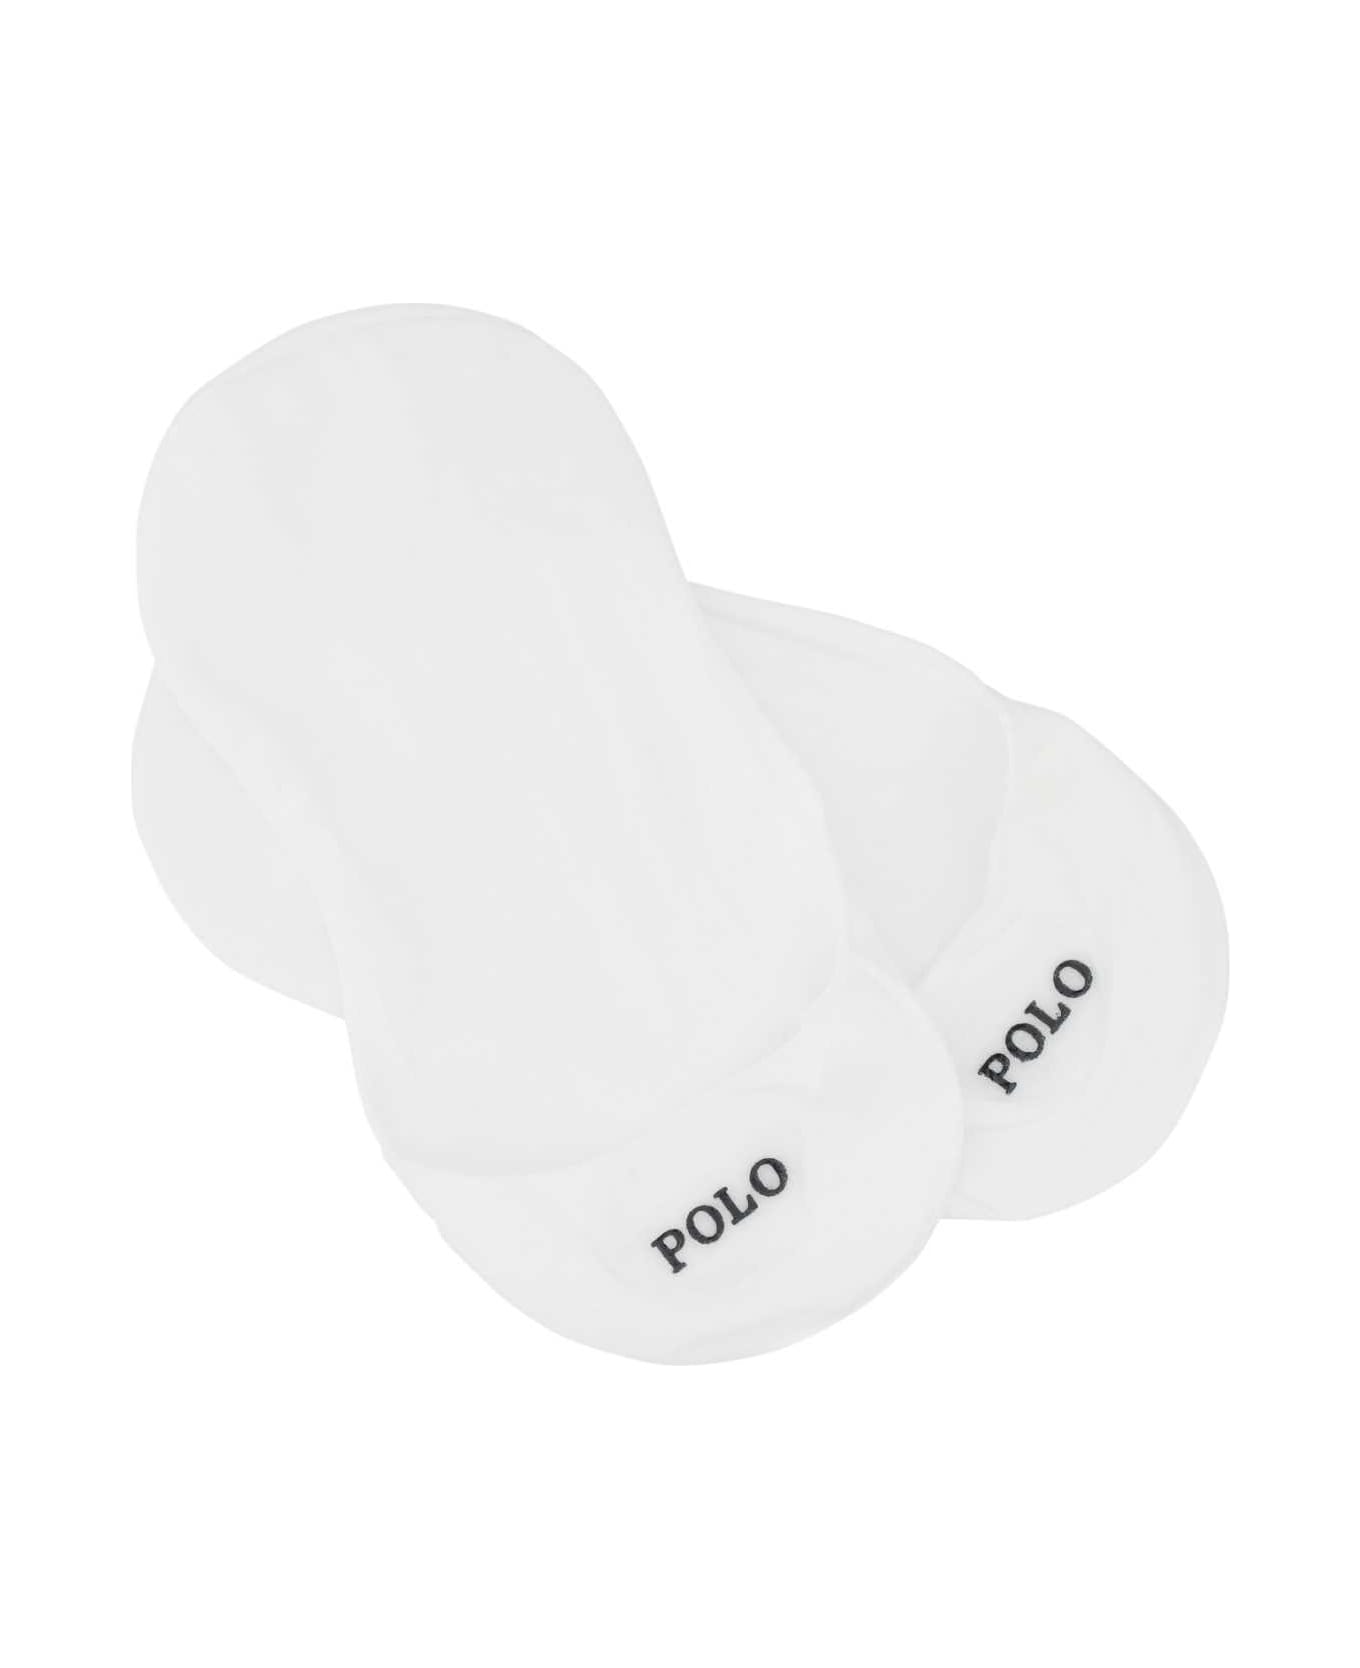 Polo Ralph Lauren White Stretch Cotton Invisible Socks Set - White